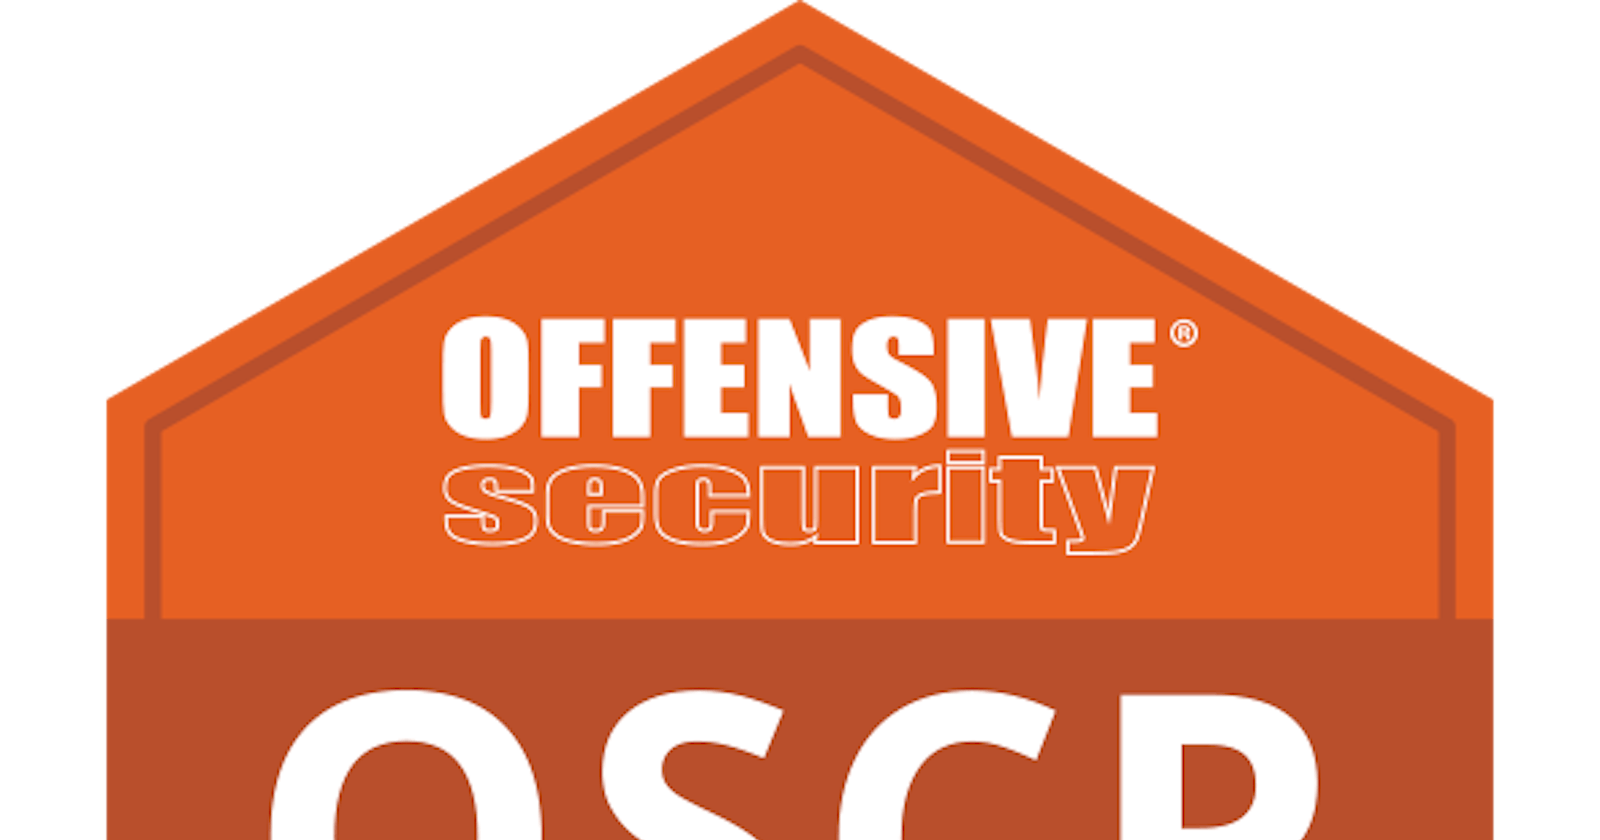 How I passed the OSCP exam